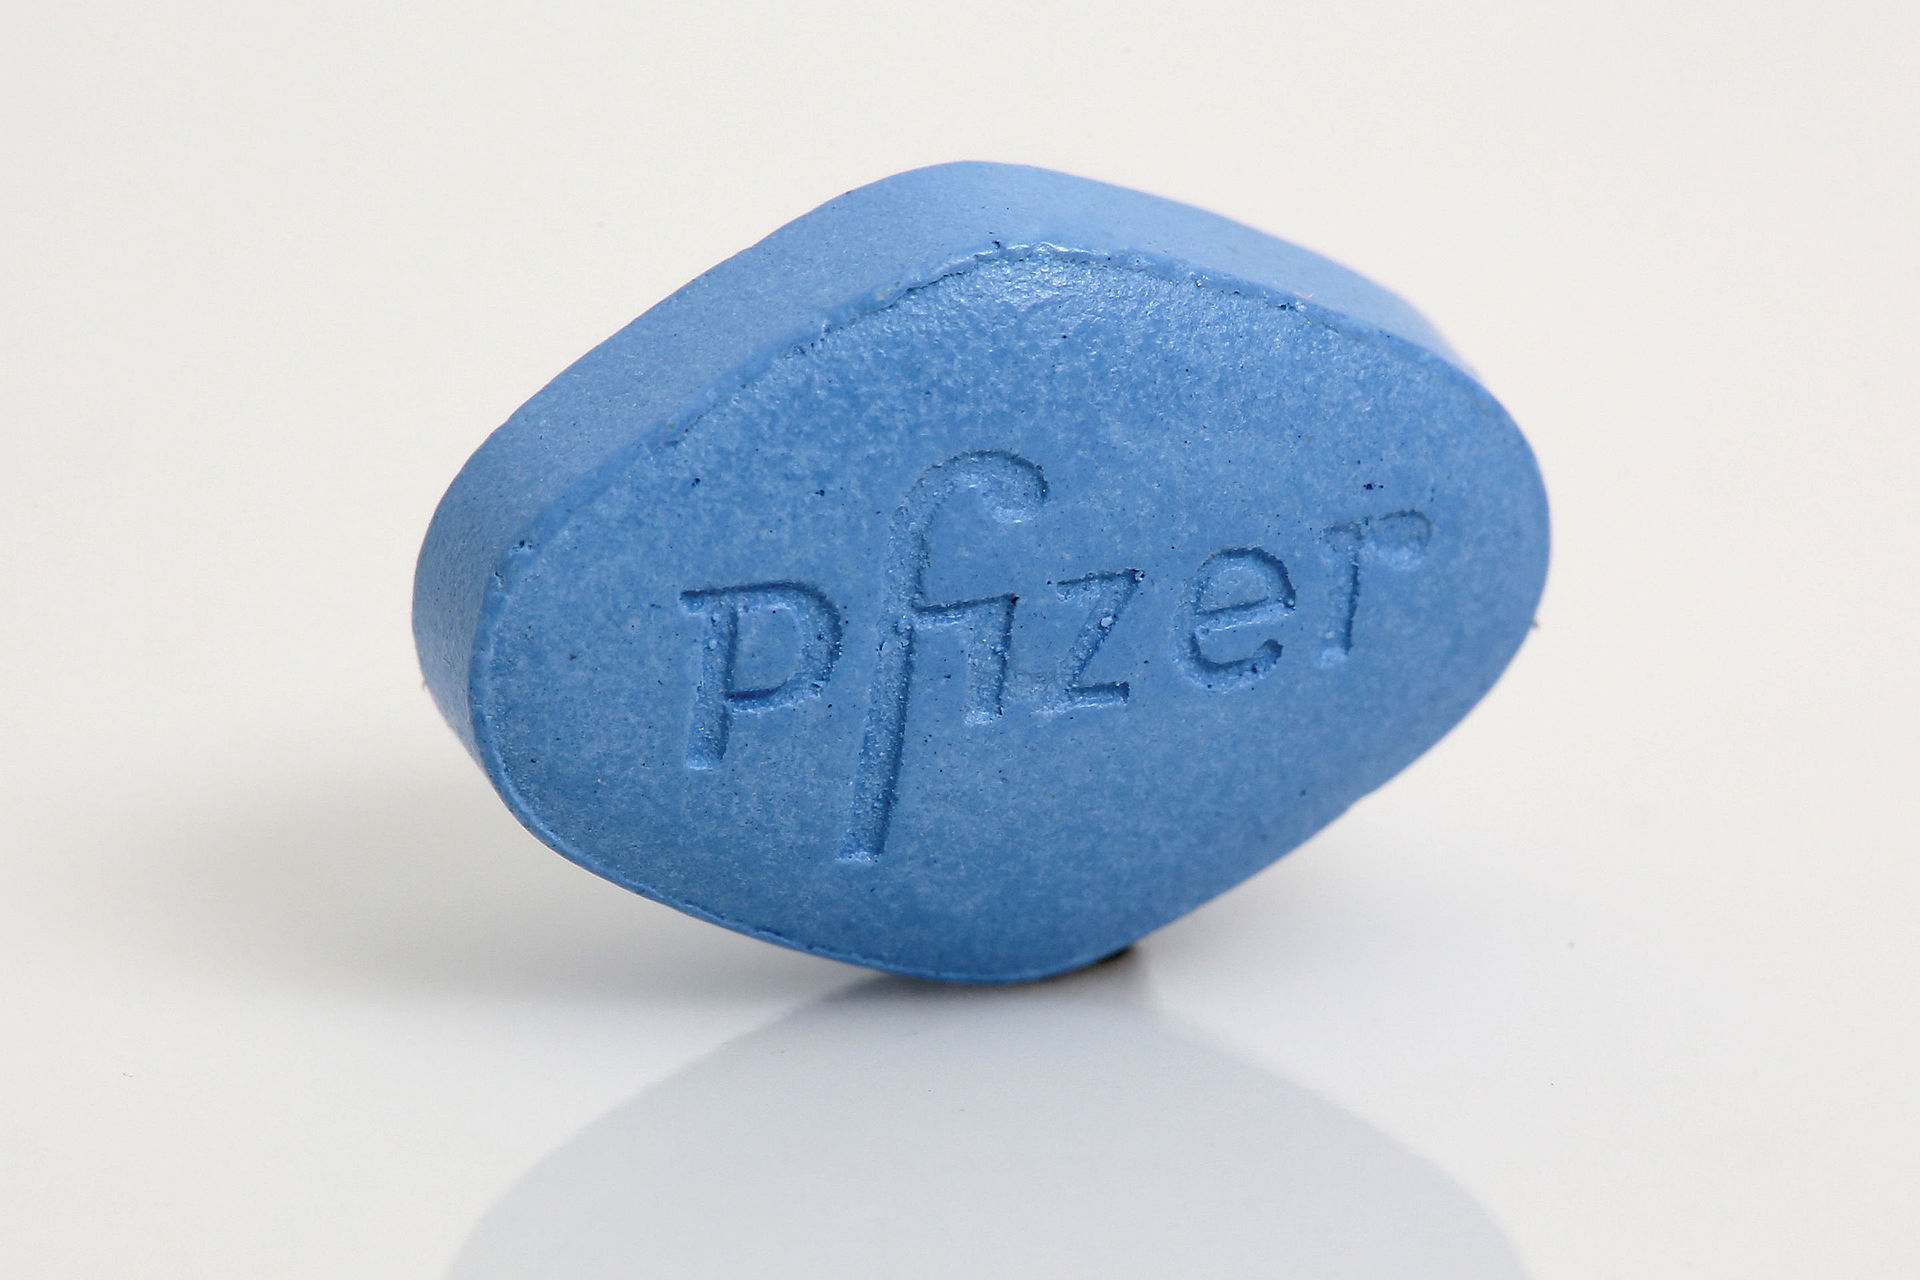 A blue Viagra pill